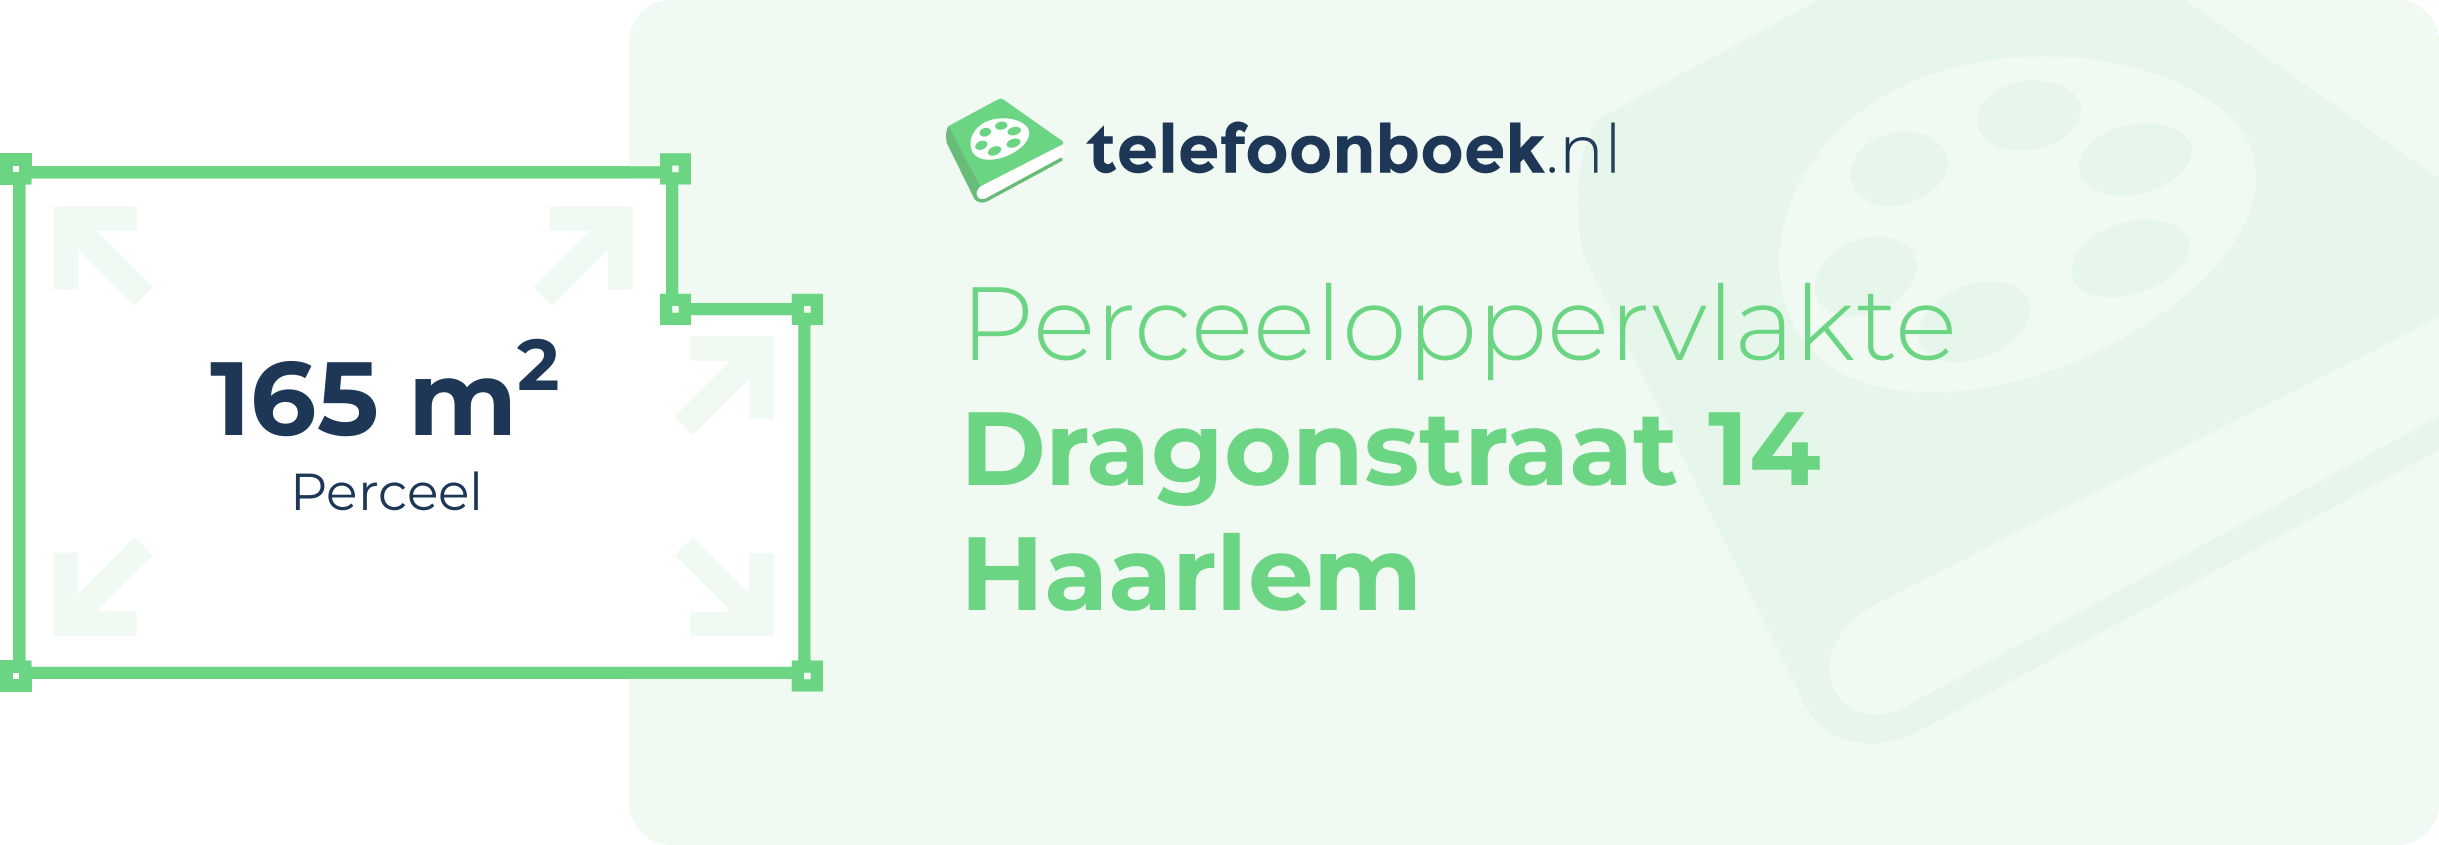 Perceeloppervlakte Dragonstraat 14 Haarlem